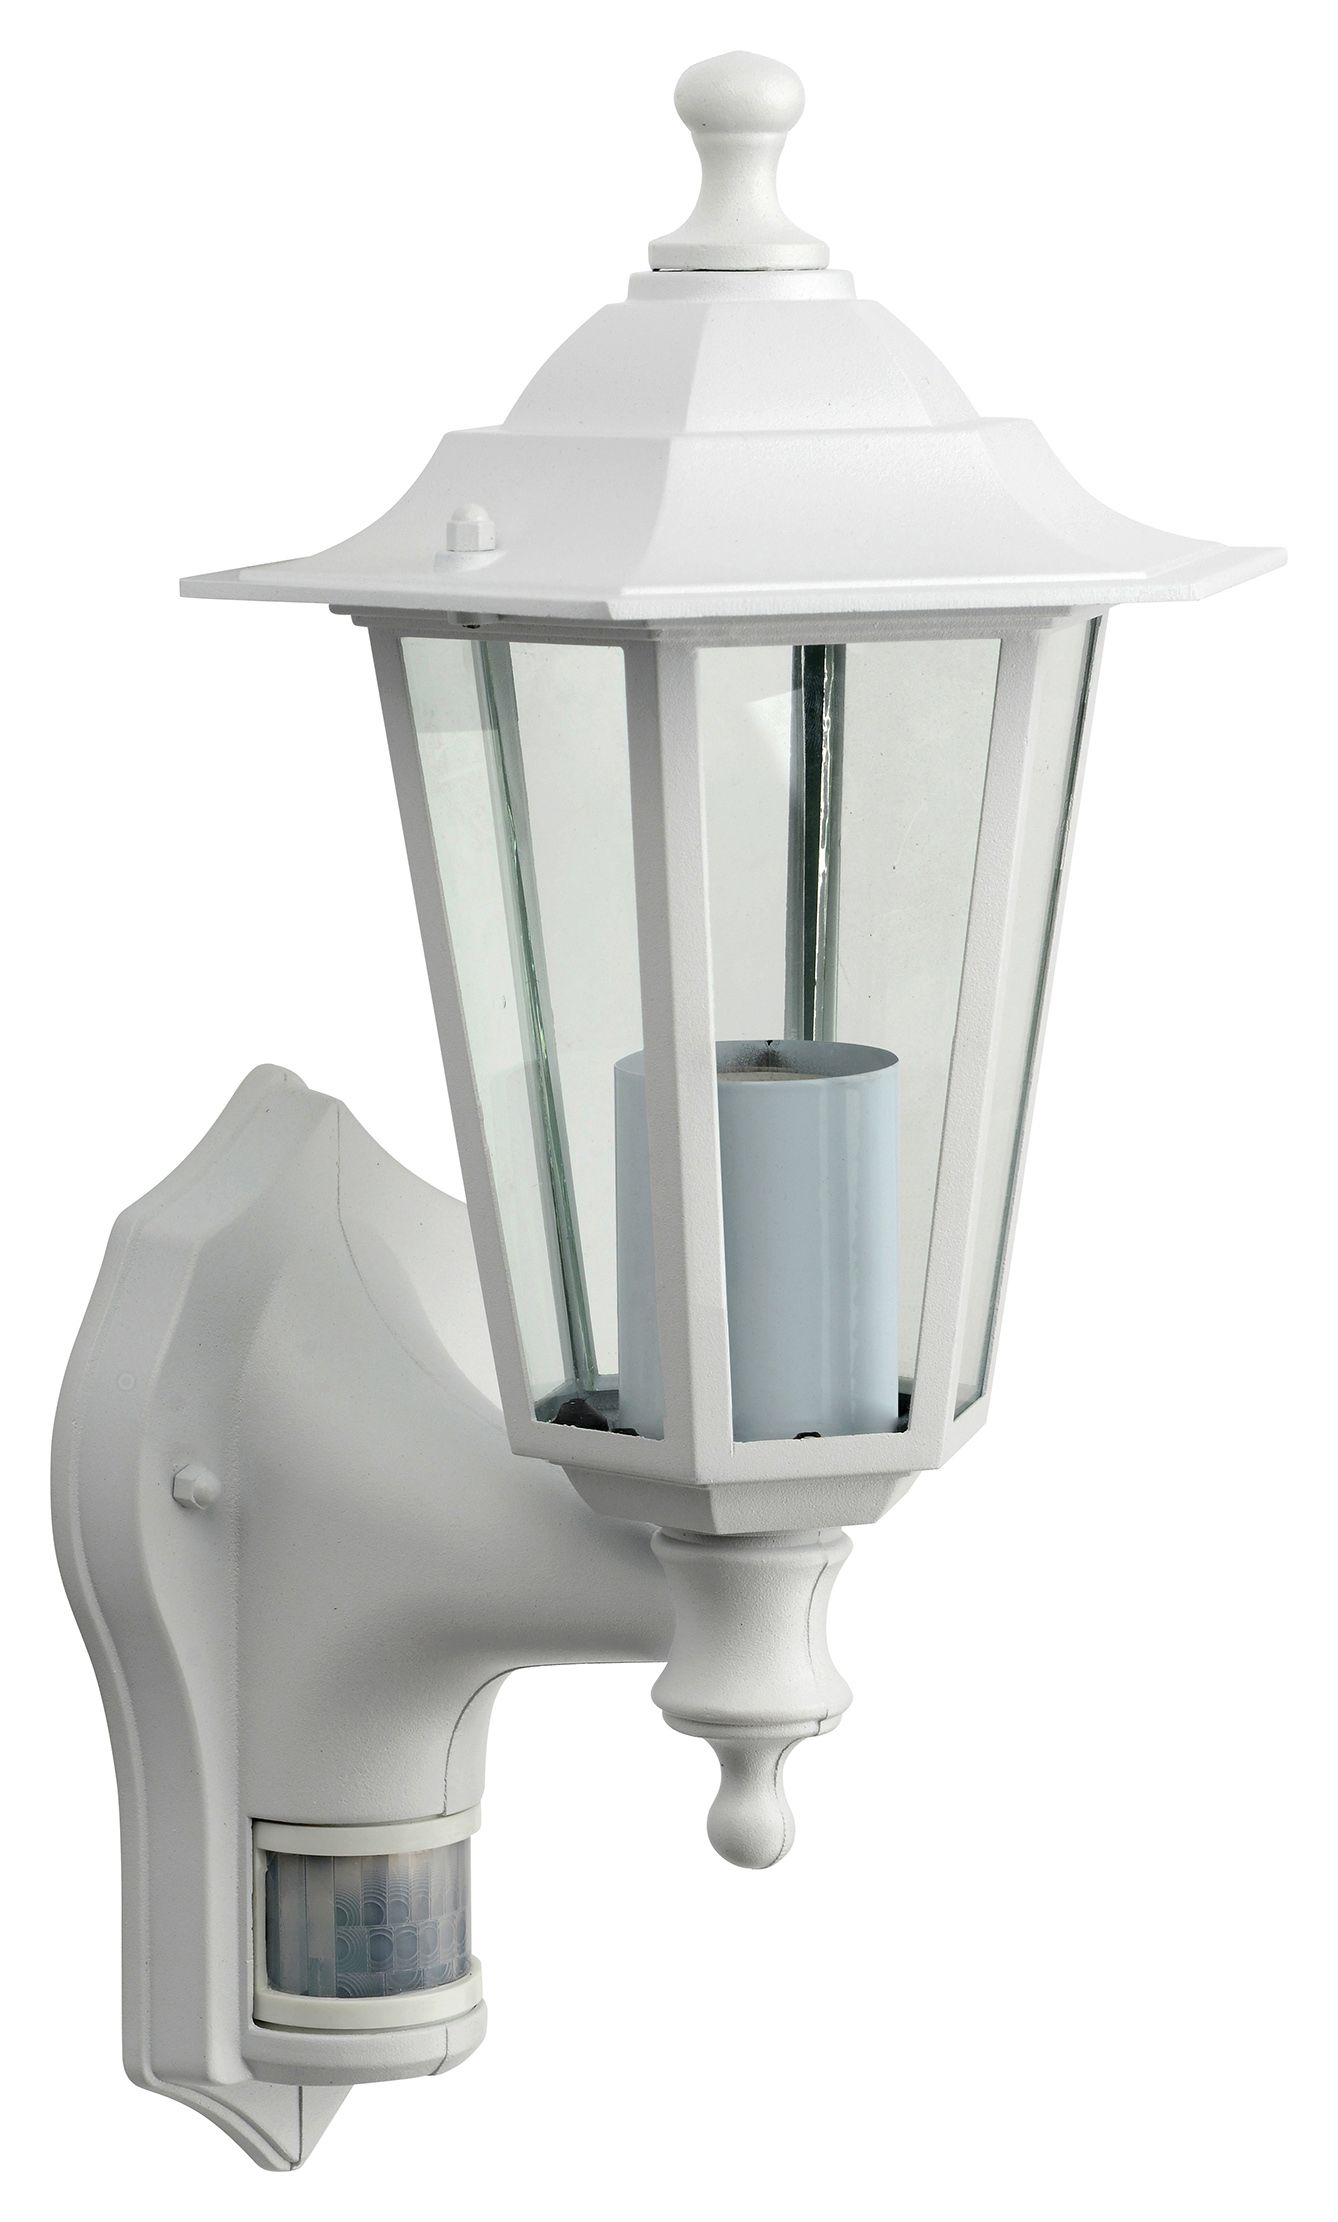 Wickes White PIR Lantern Wall Light - 60W